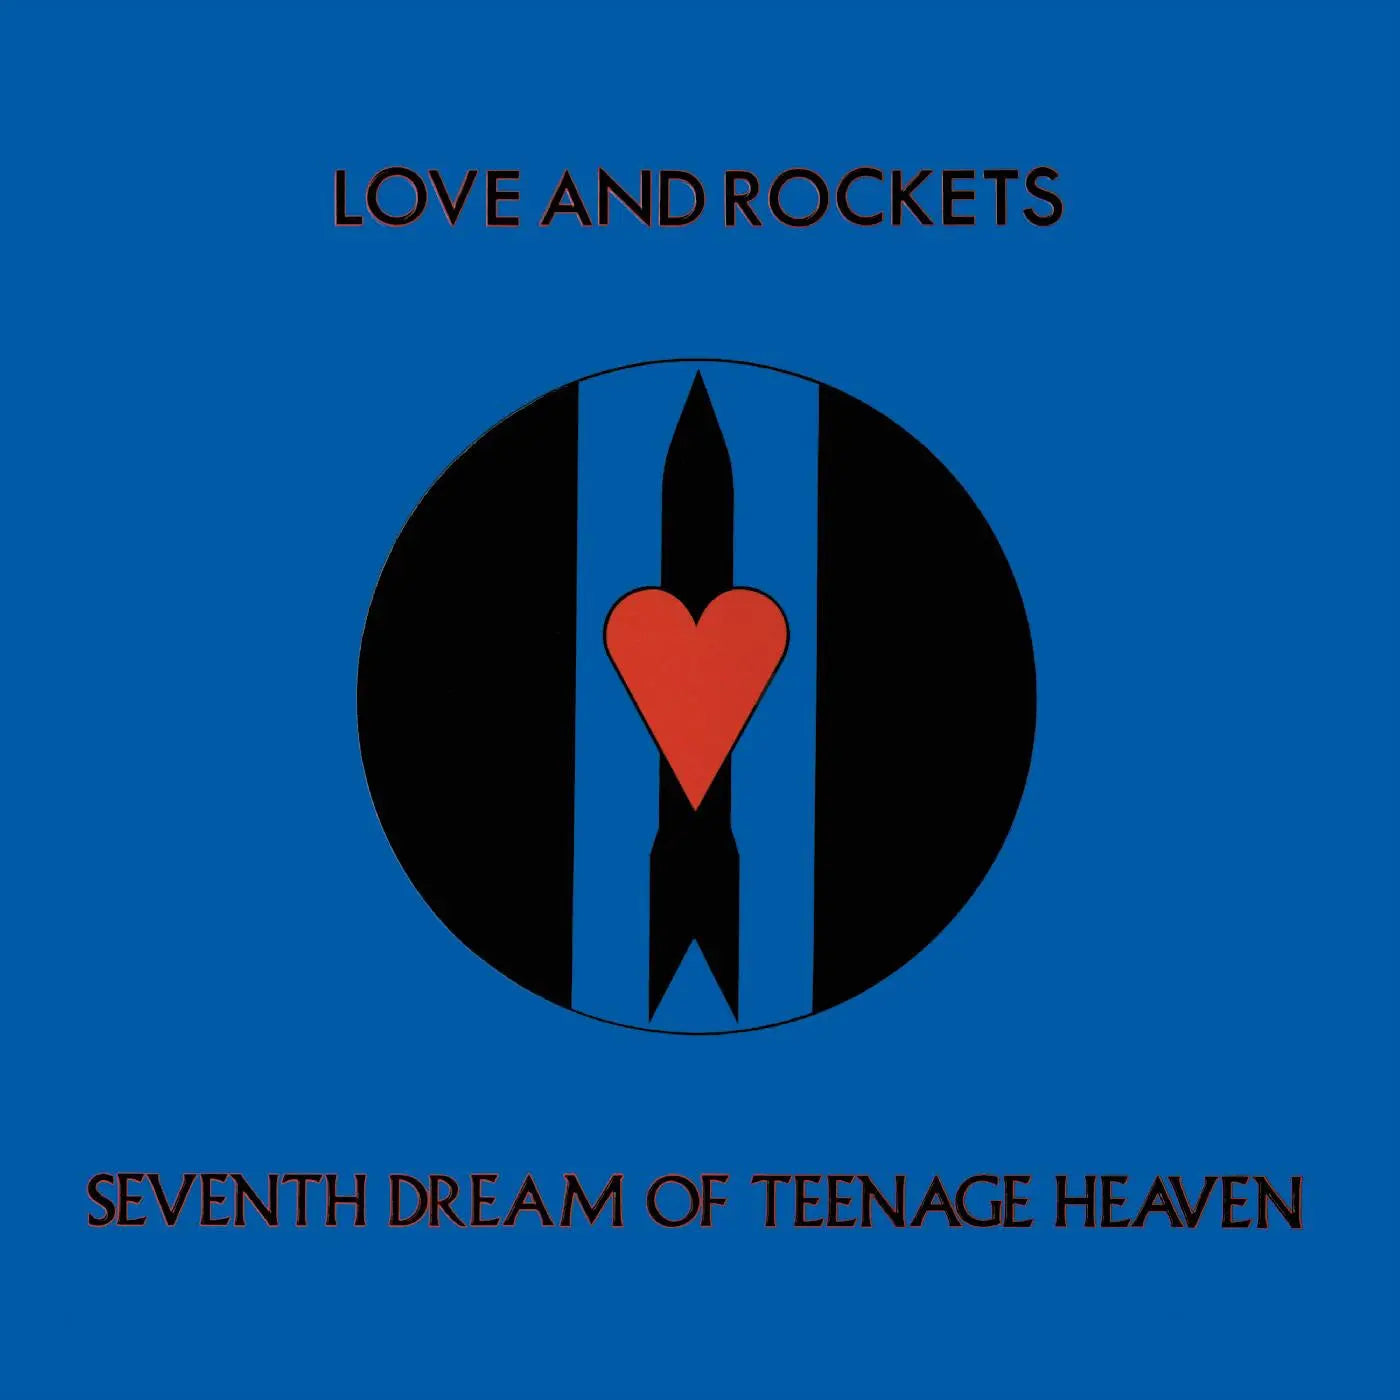 Drowned World Records - Seventh Dream of Teenage Heaven [Vinyl LP]